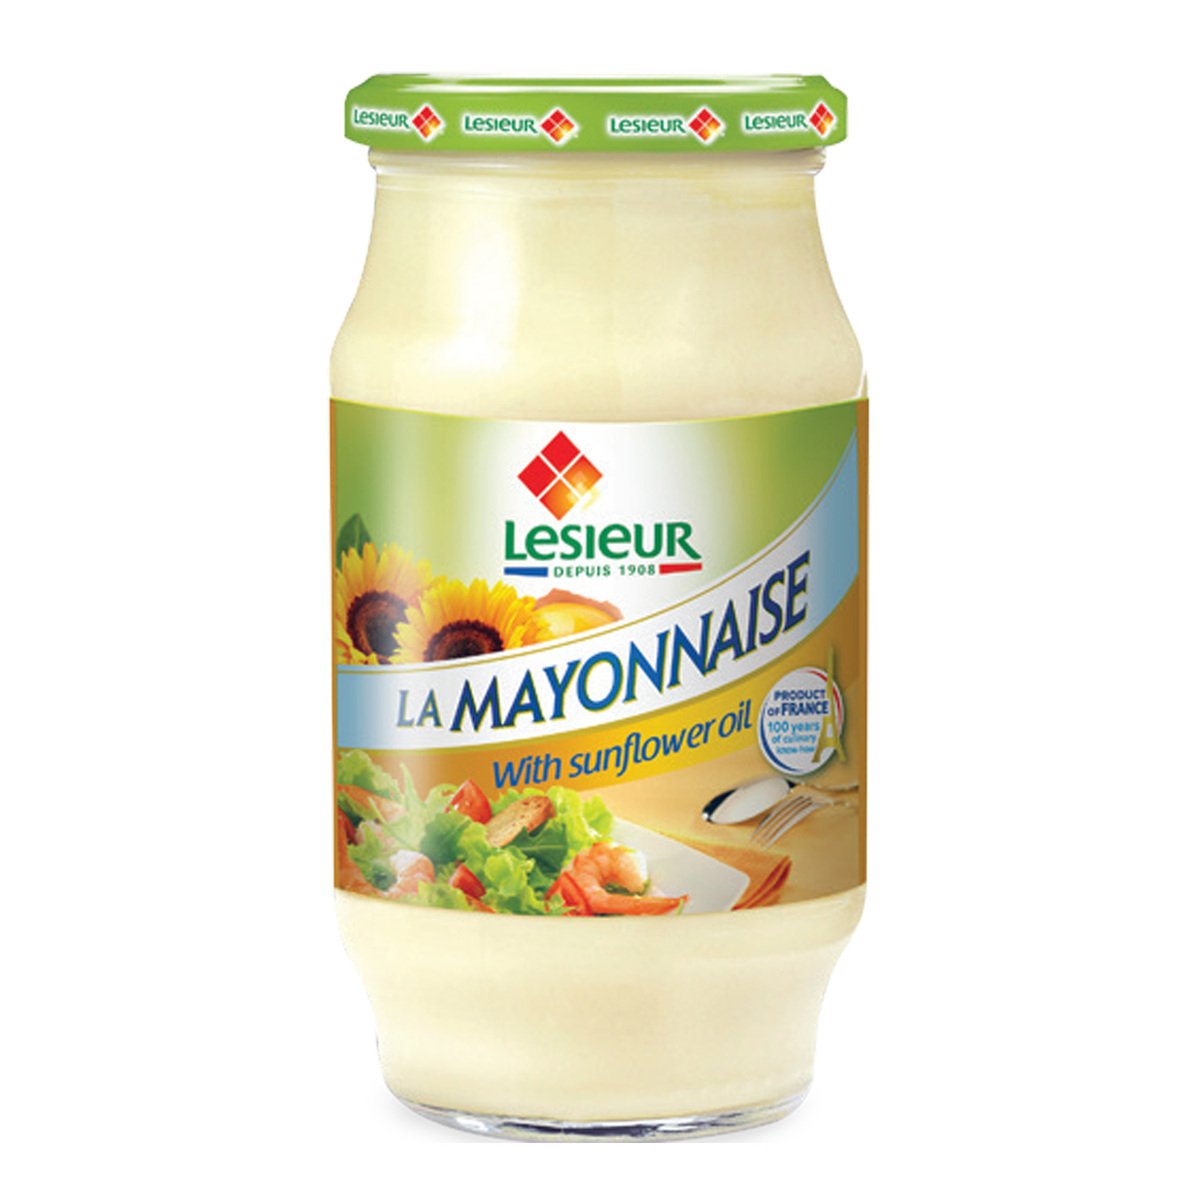 La Mayonnaise